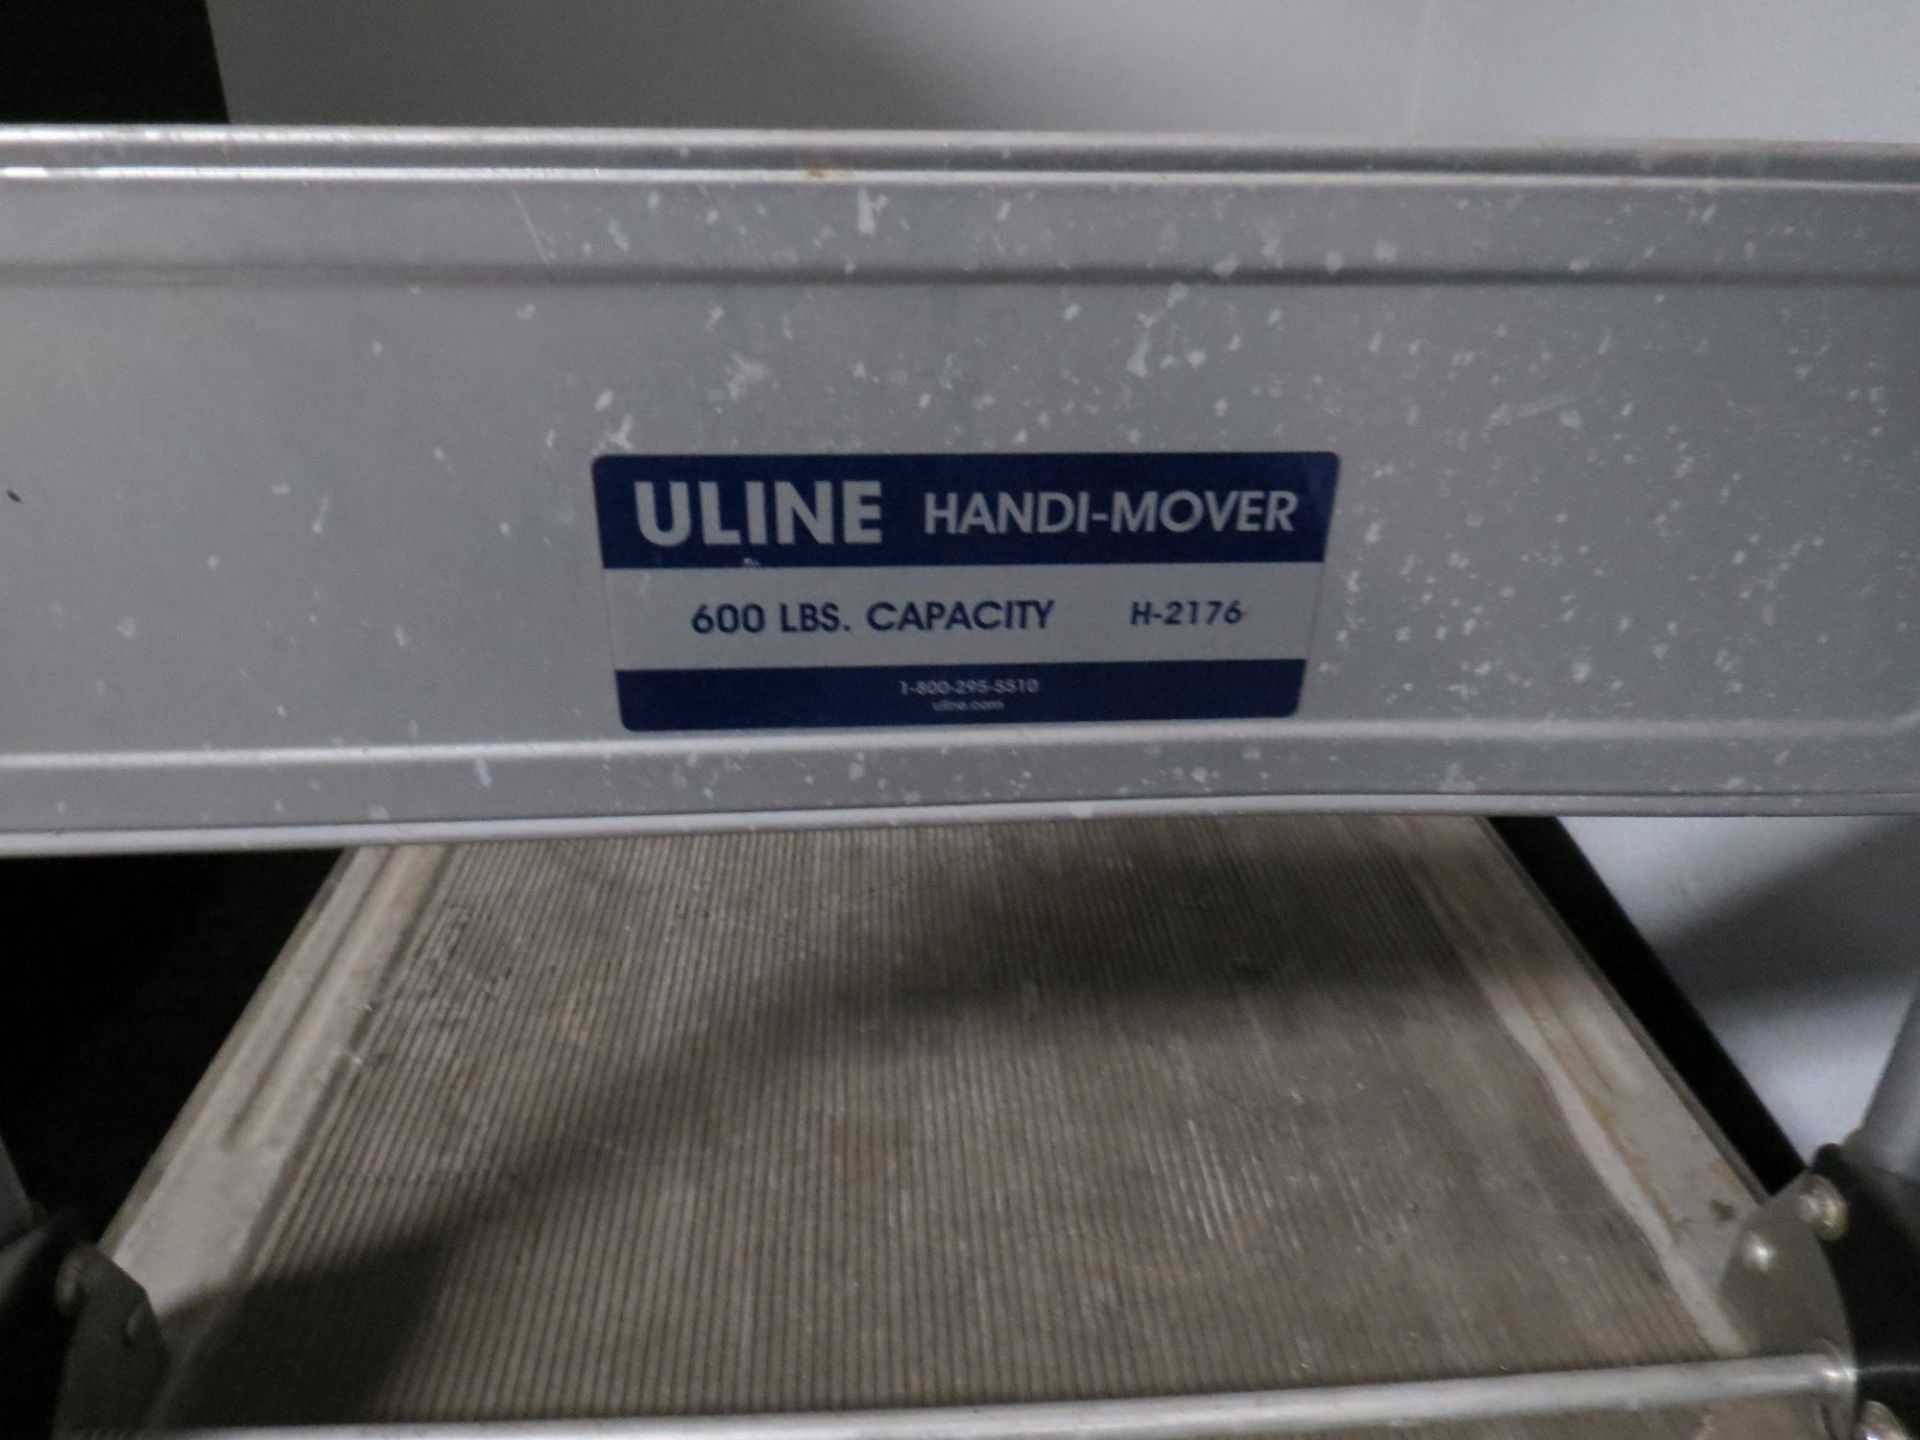 ULINE HANDI MOVER FLAT BED CART H-2176, 600 LBS CAPACITY - Image 2 of 2